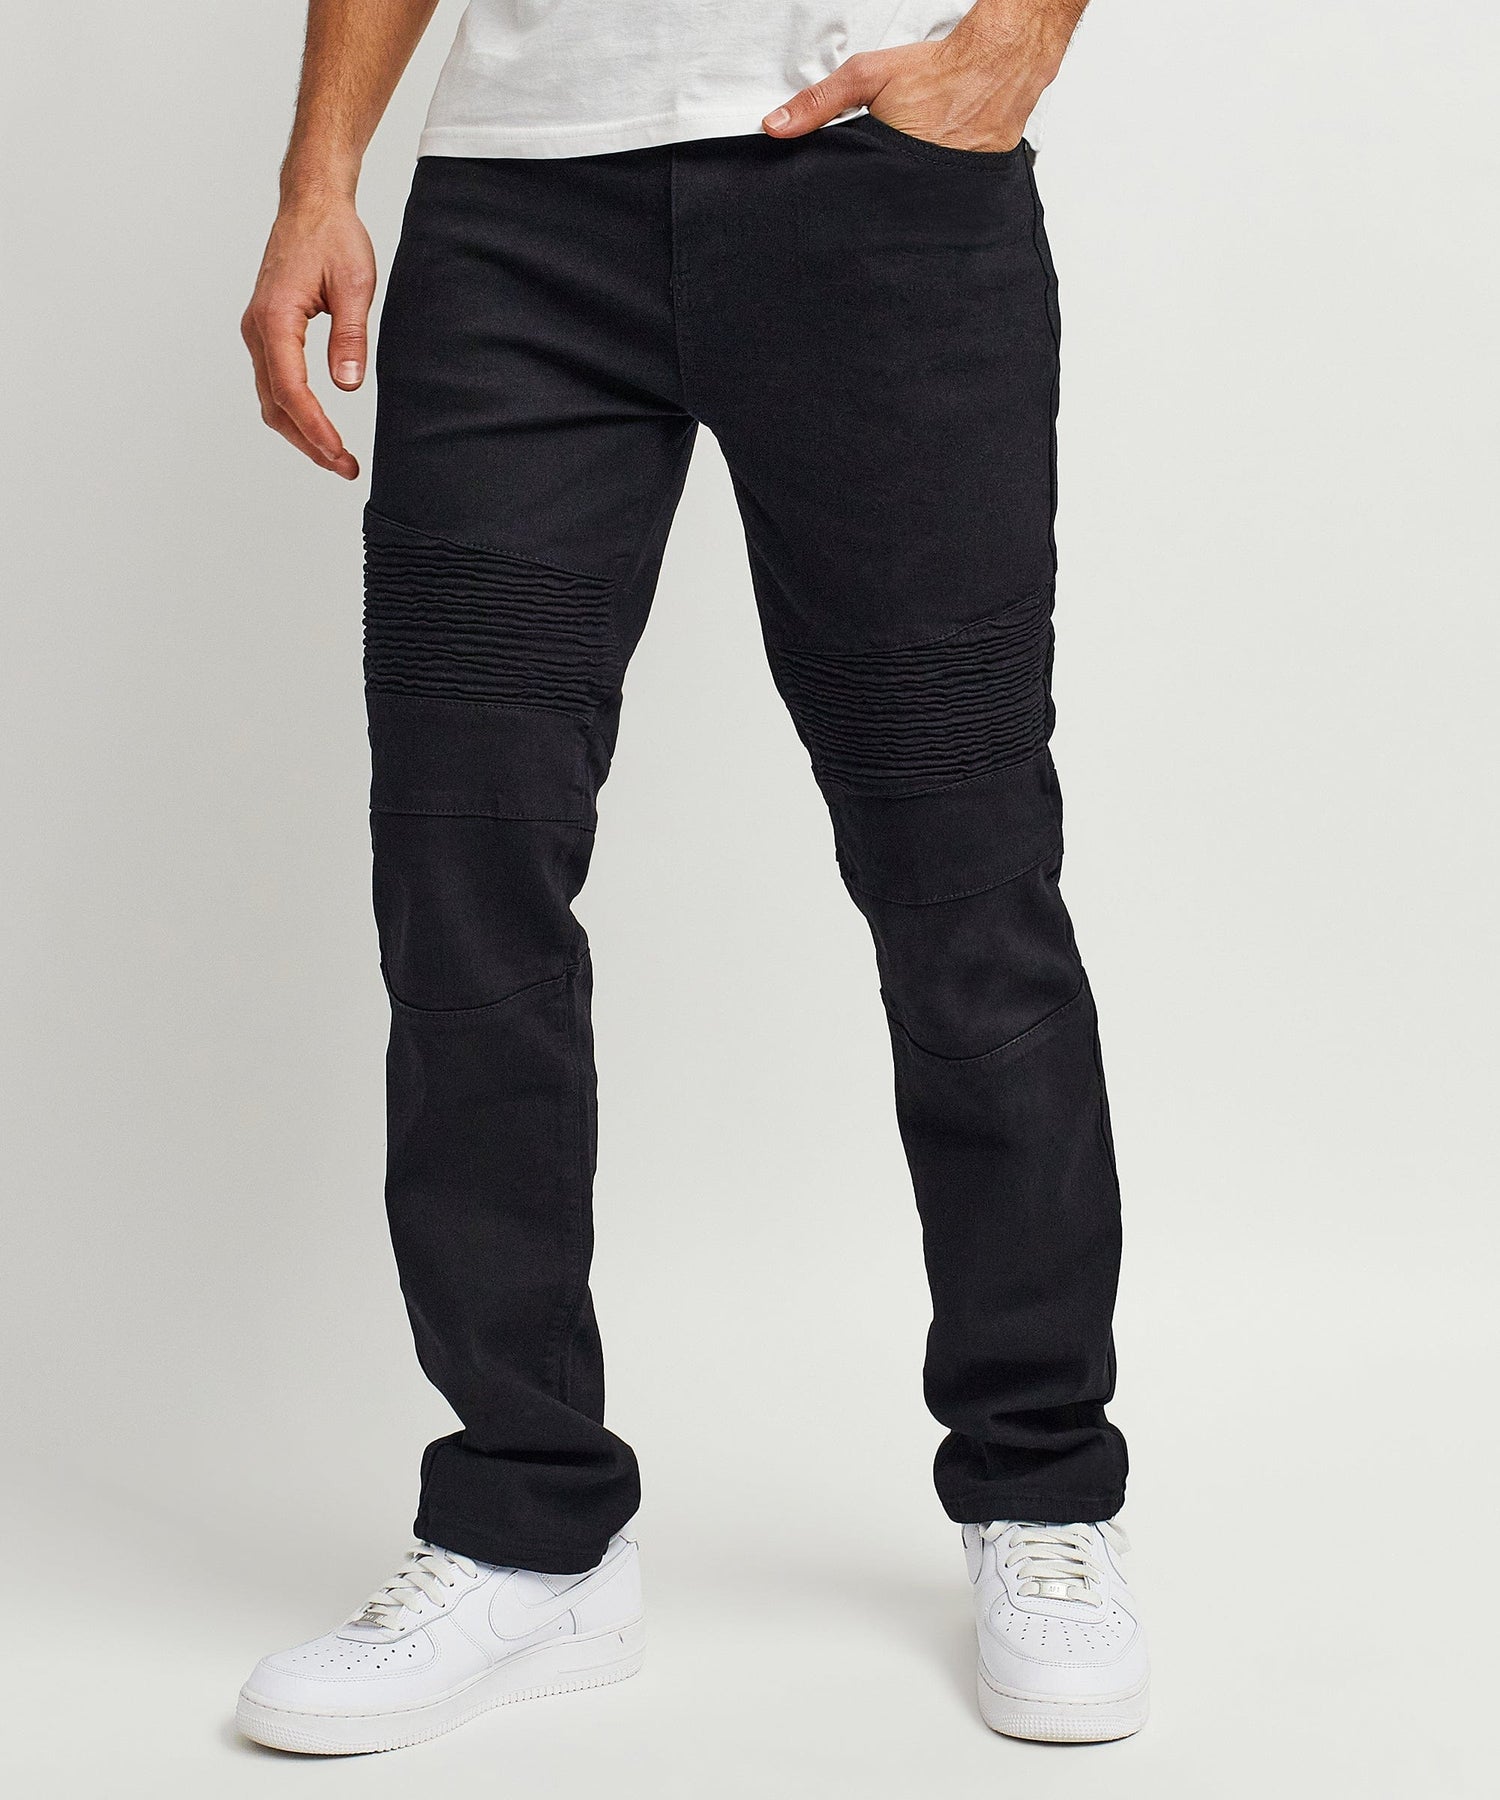 Reason Clothing | Shop Our Latest Denim Jeans, Jackets & Shorts